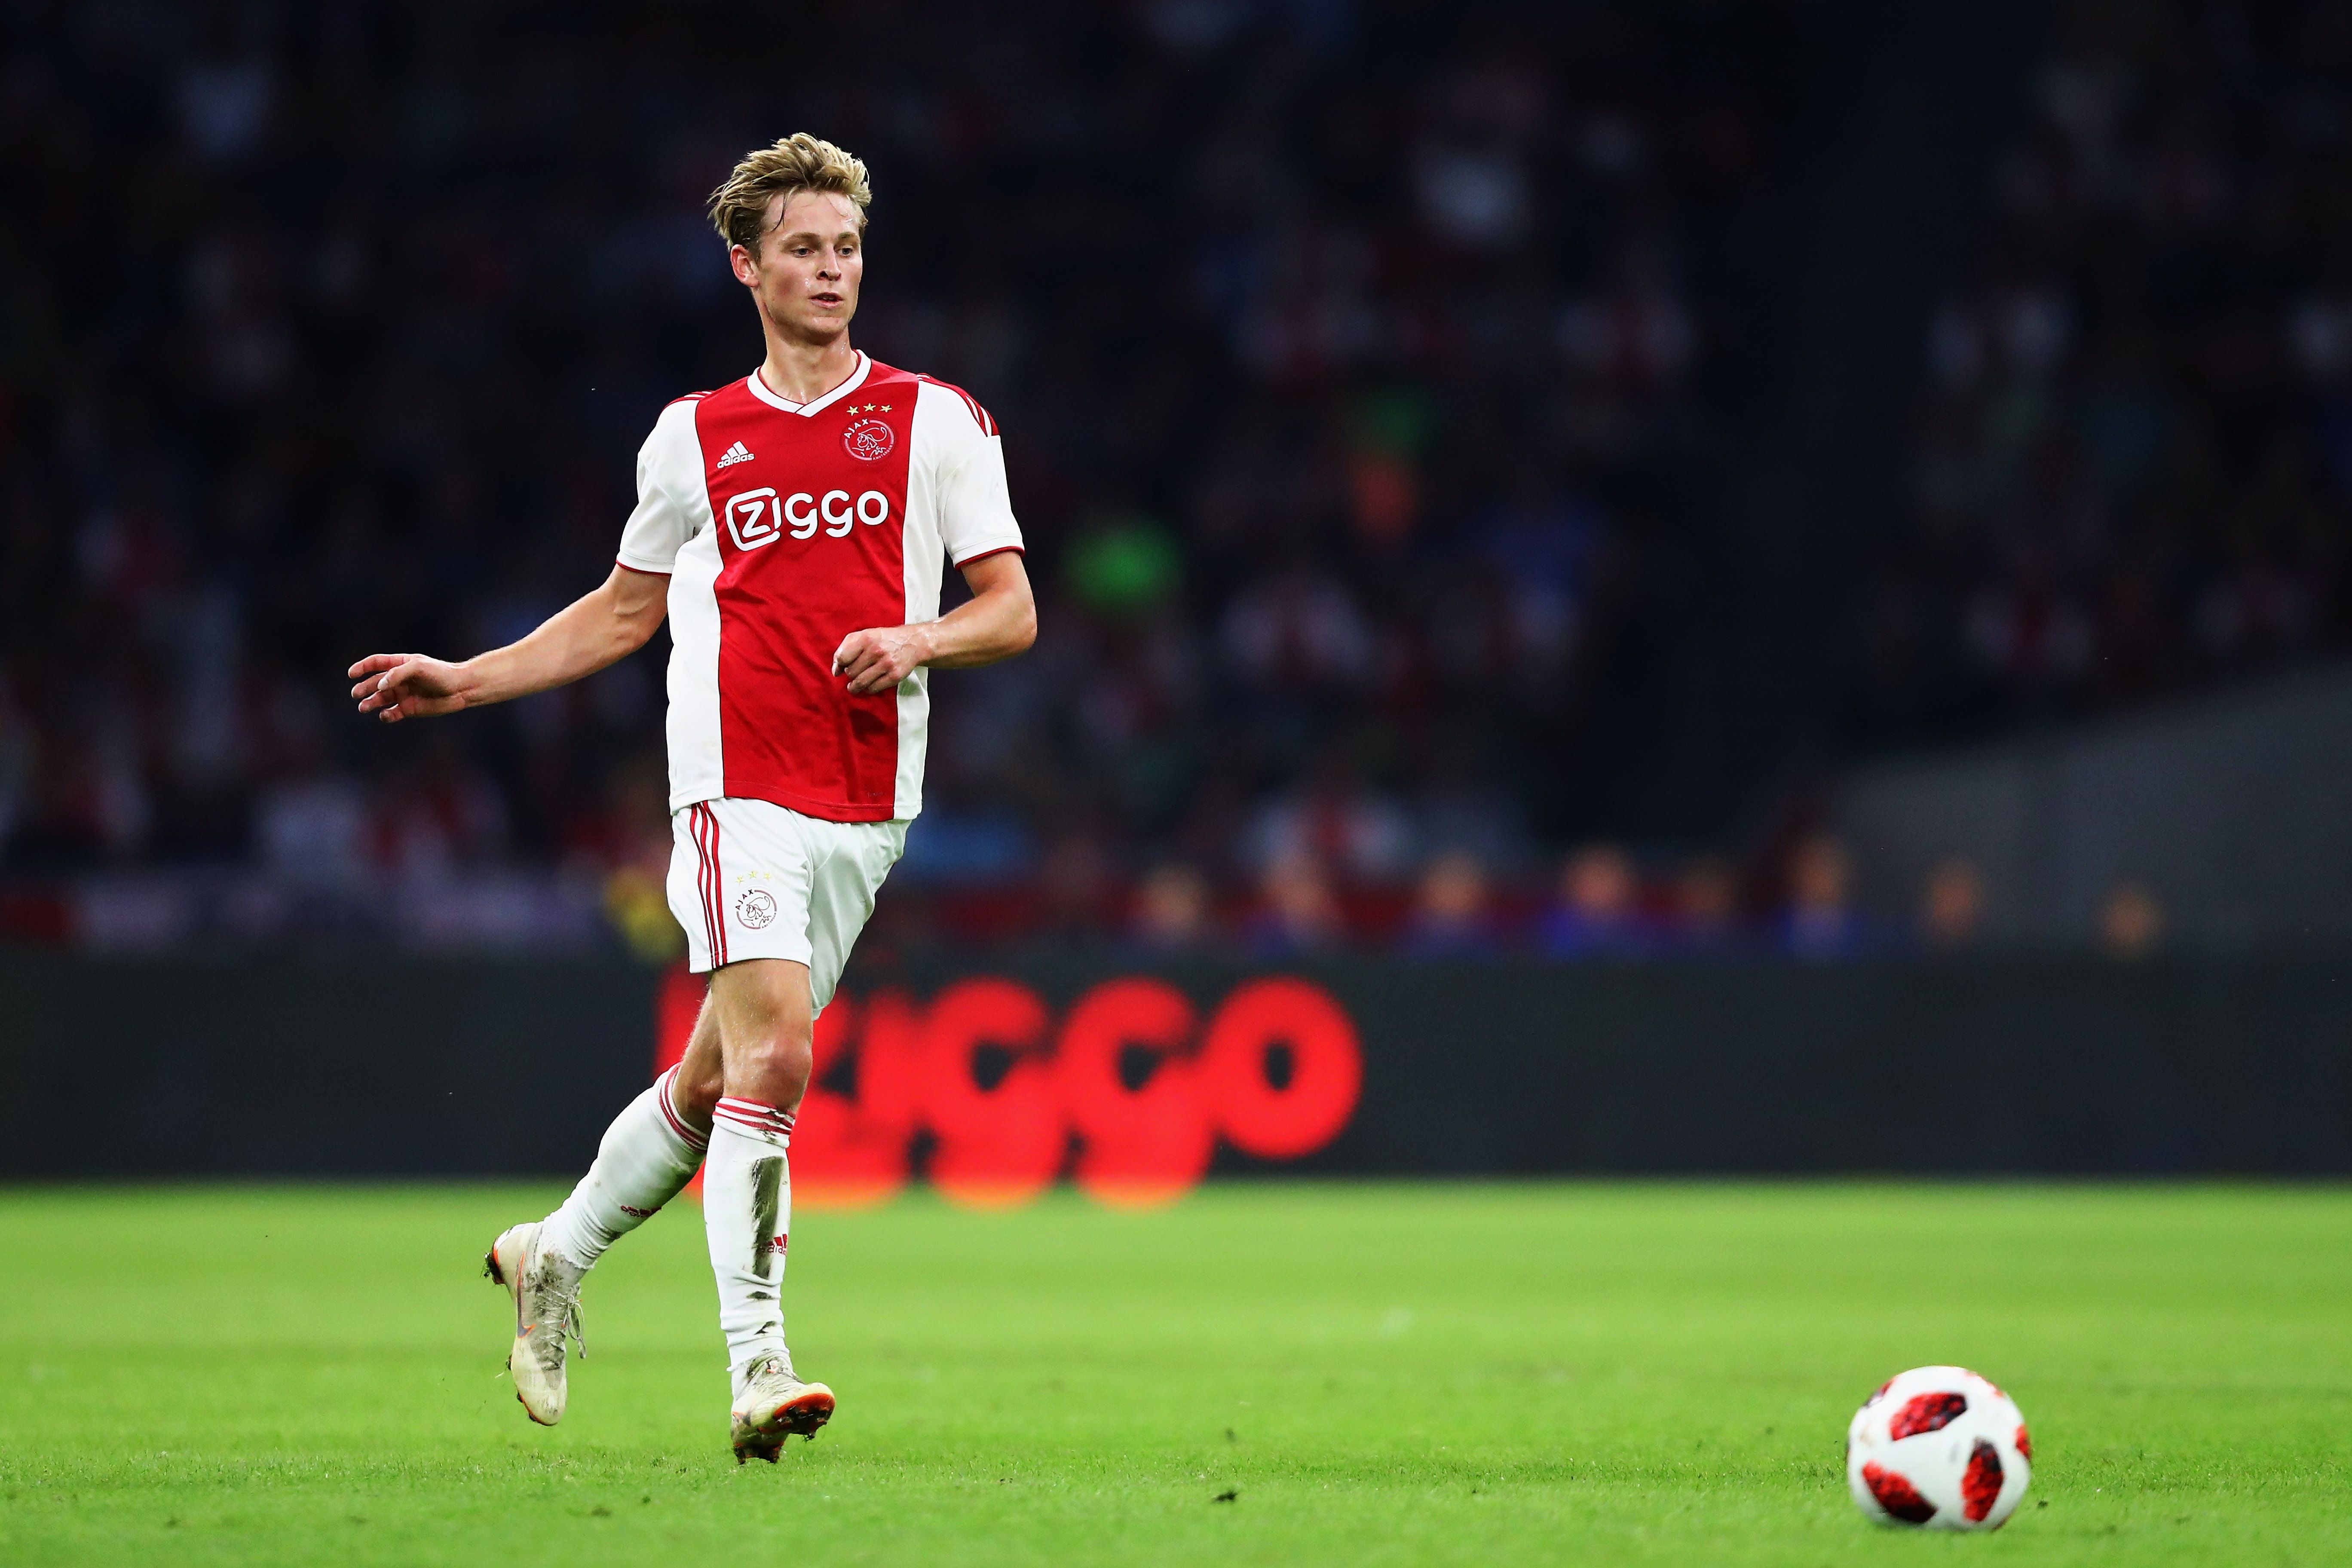 Frenkie de Jong playing for Ajax in 2018